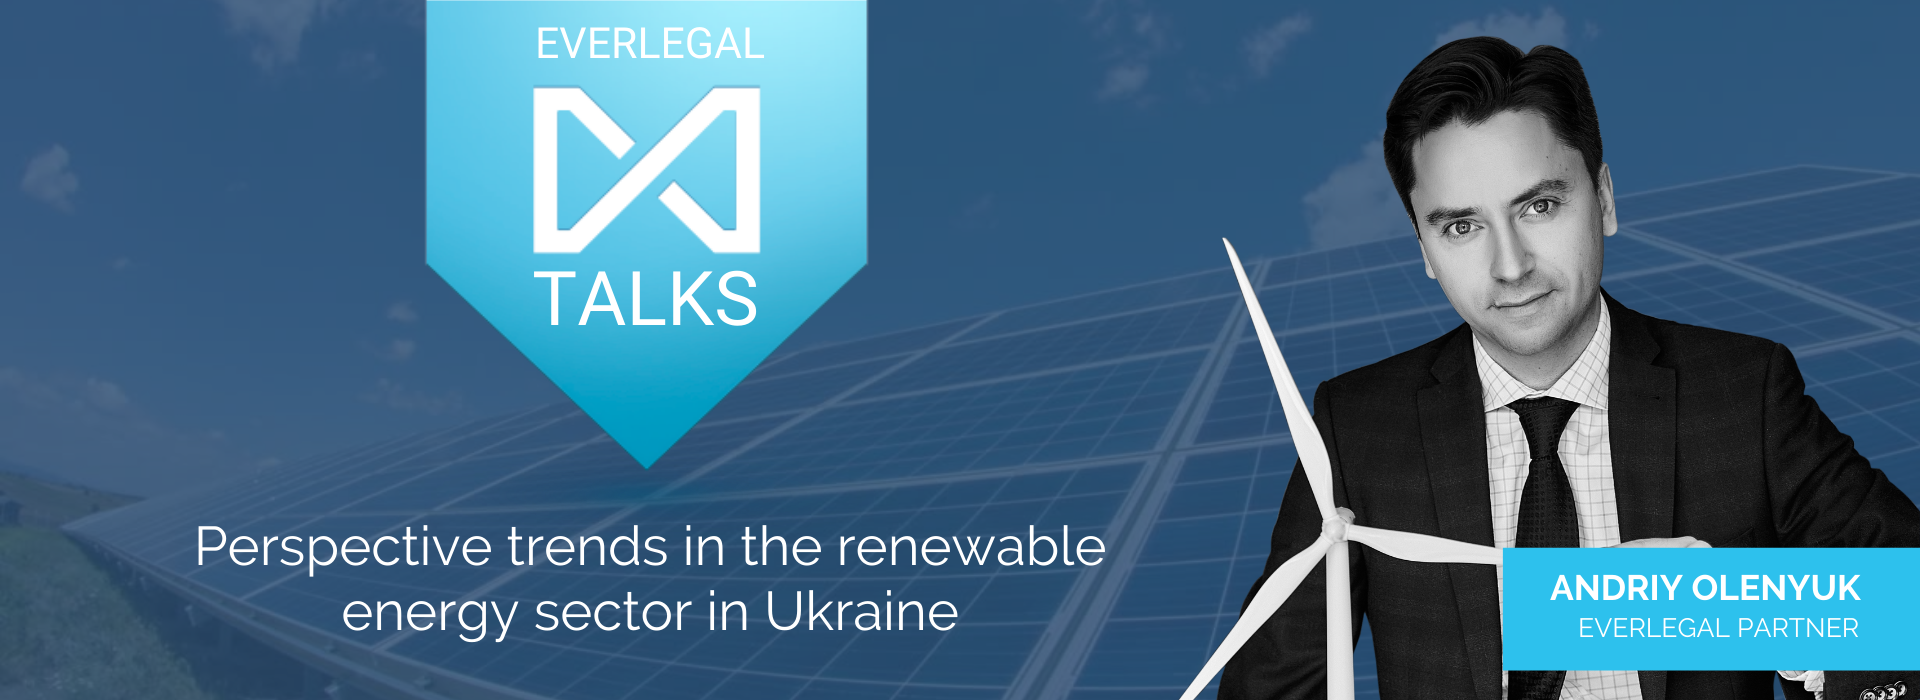 EverlegalTalks: Andriy Olenyuk on the Perspective Trends in the Renewable Energy Sector in Ukraine